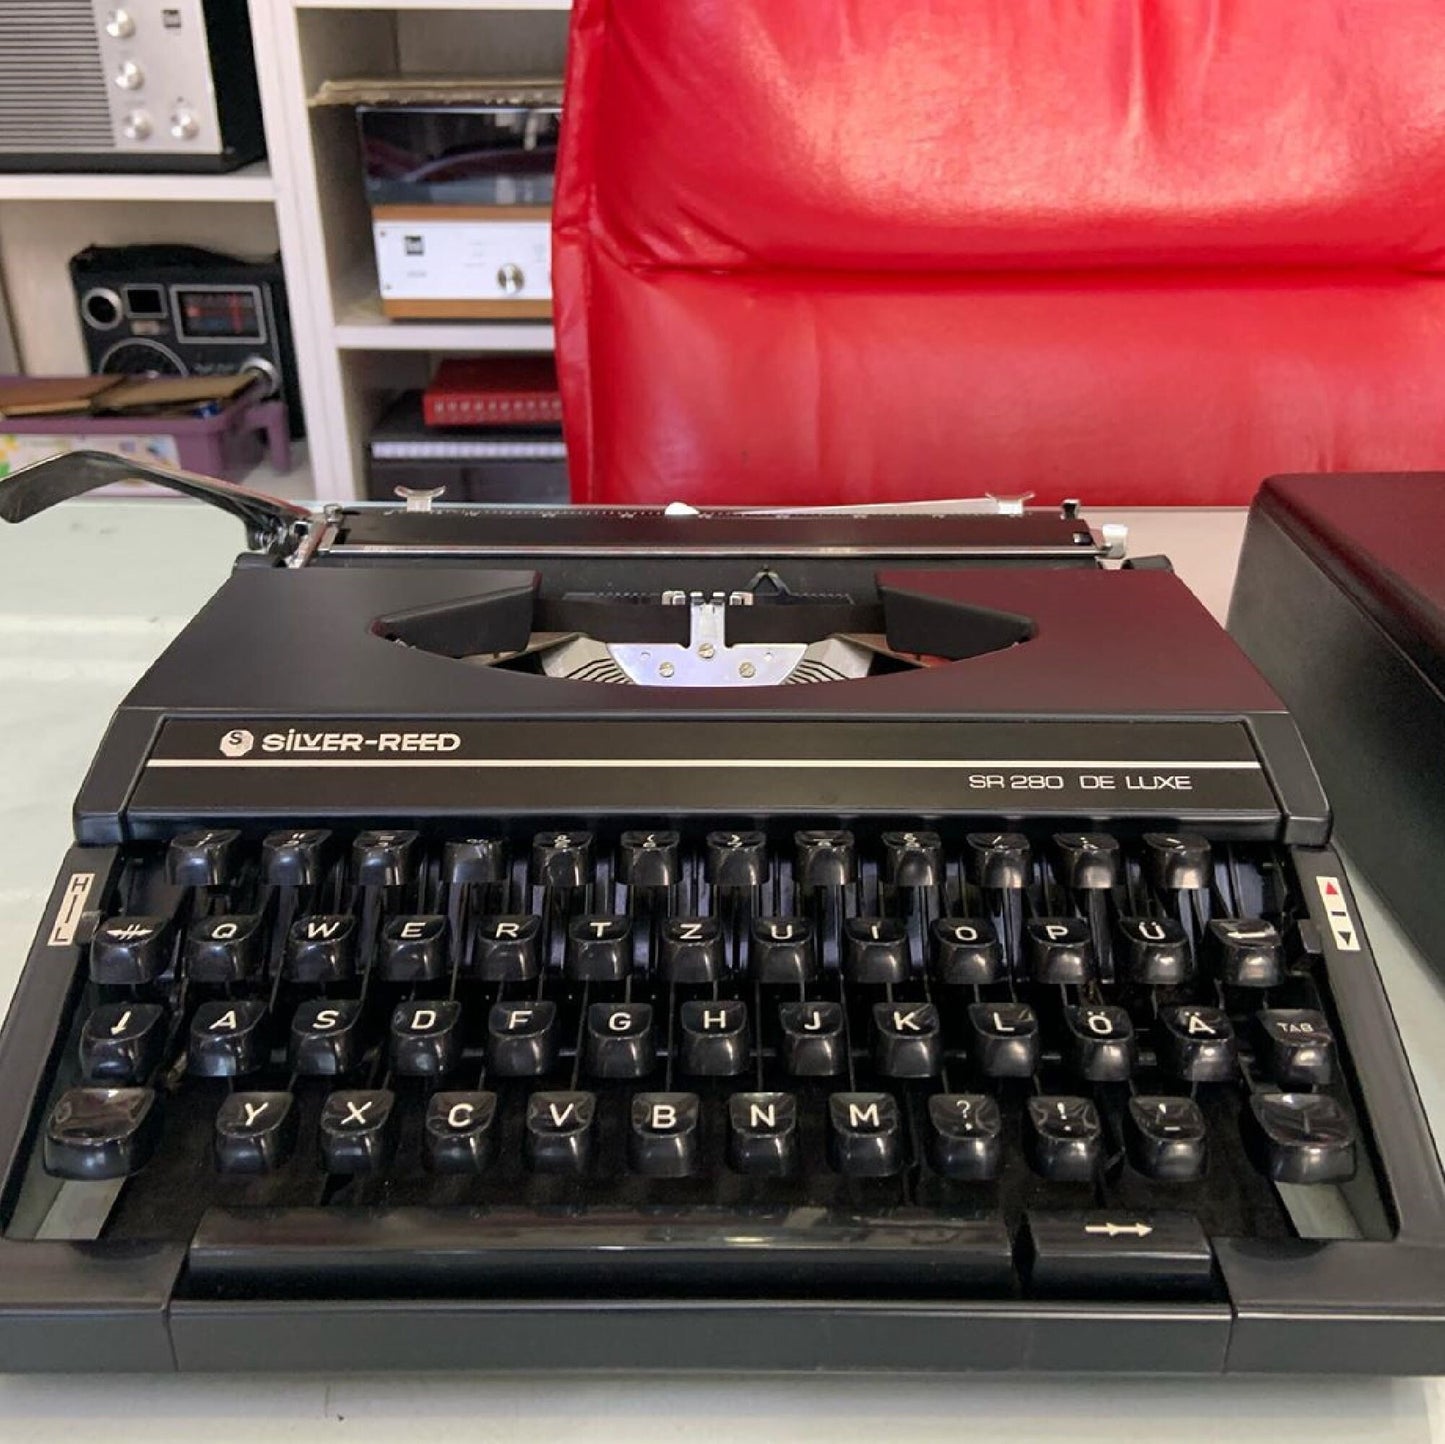 Silver Reed SR 280 Deluxe Typewriter - Functional Elegance